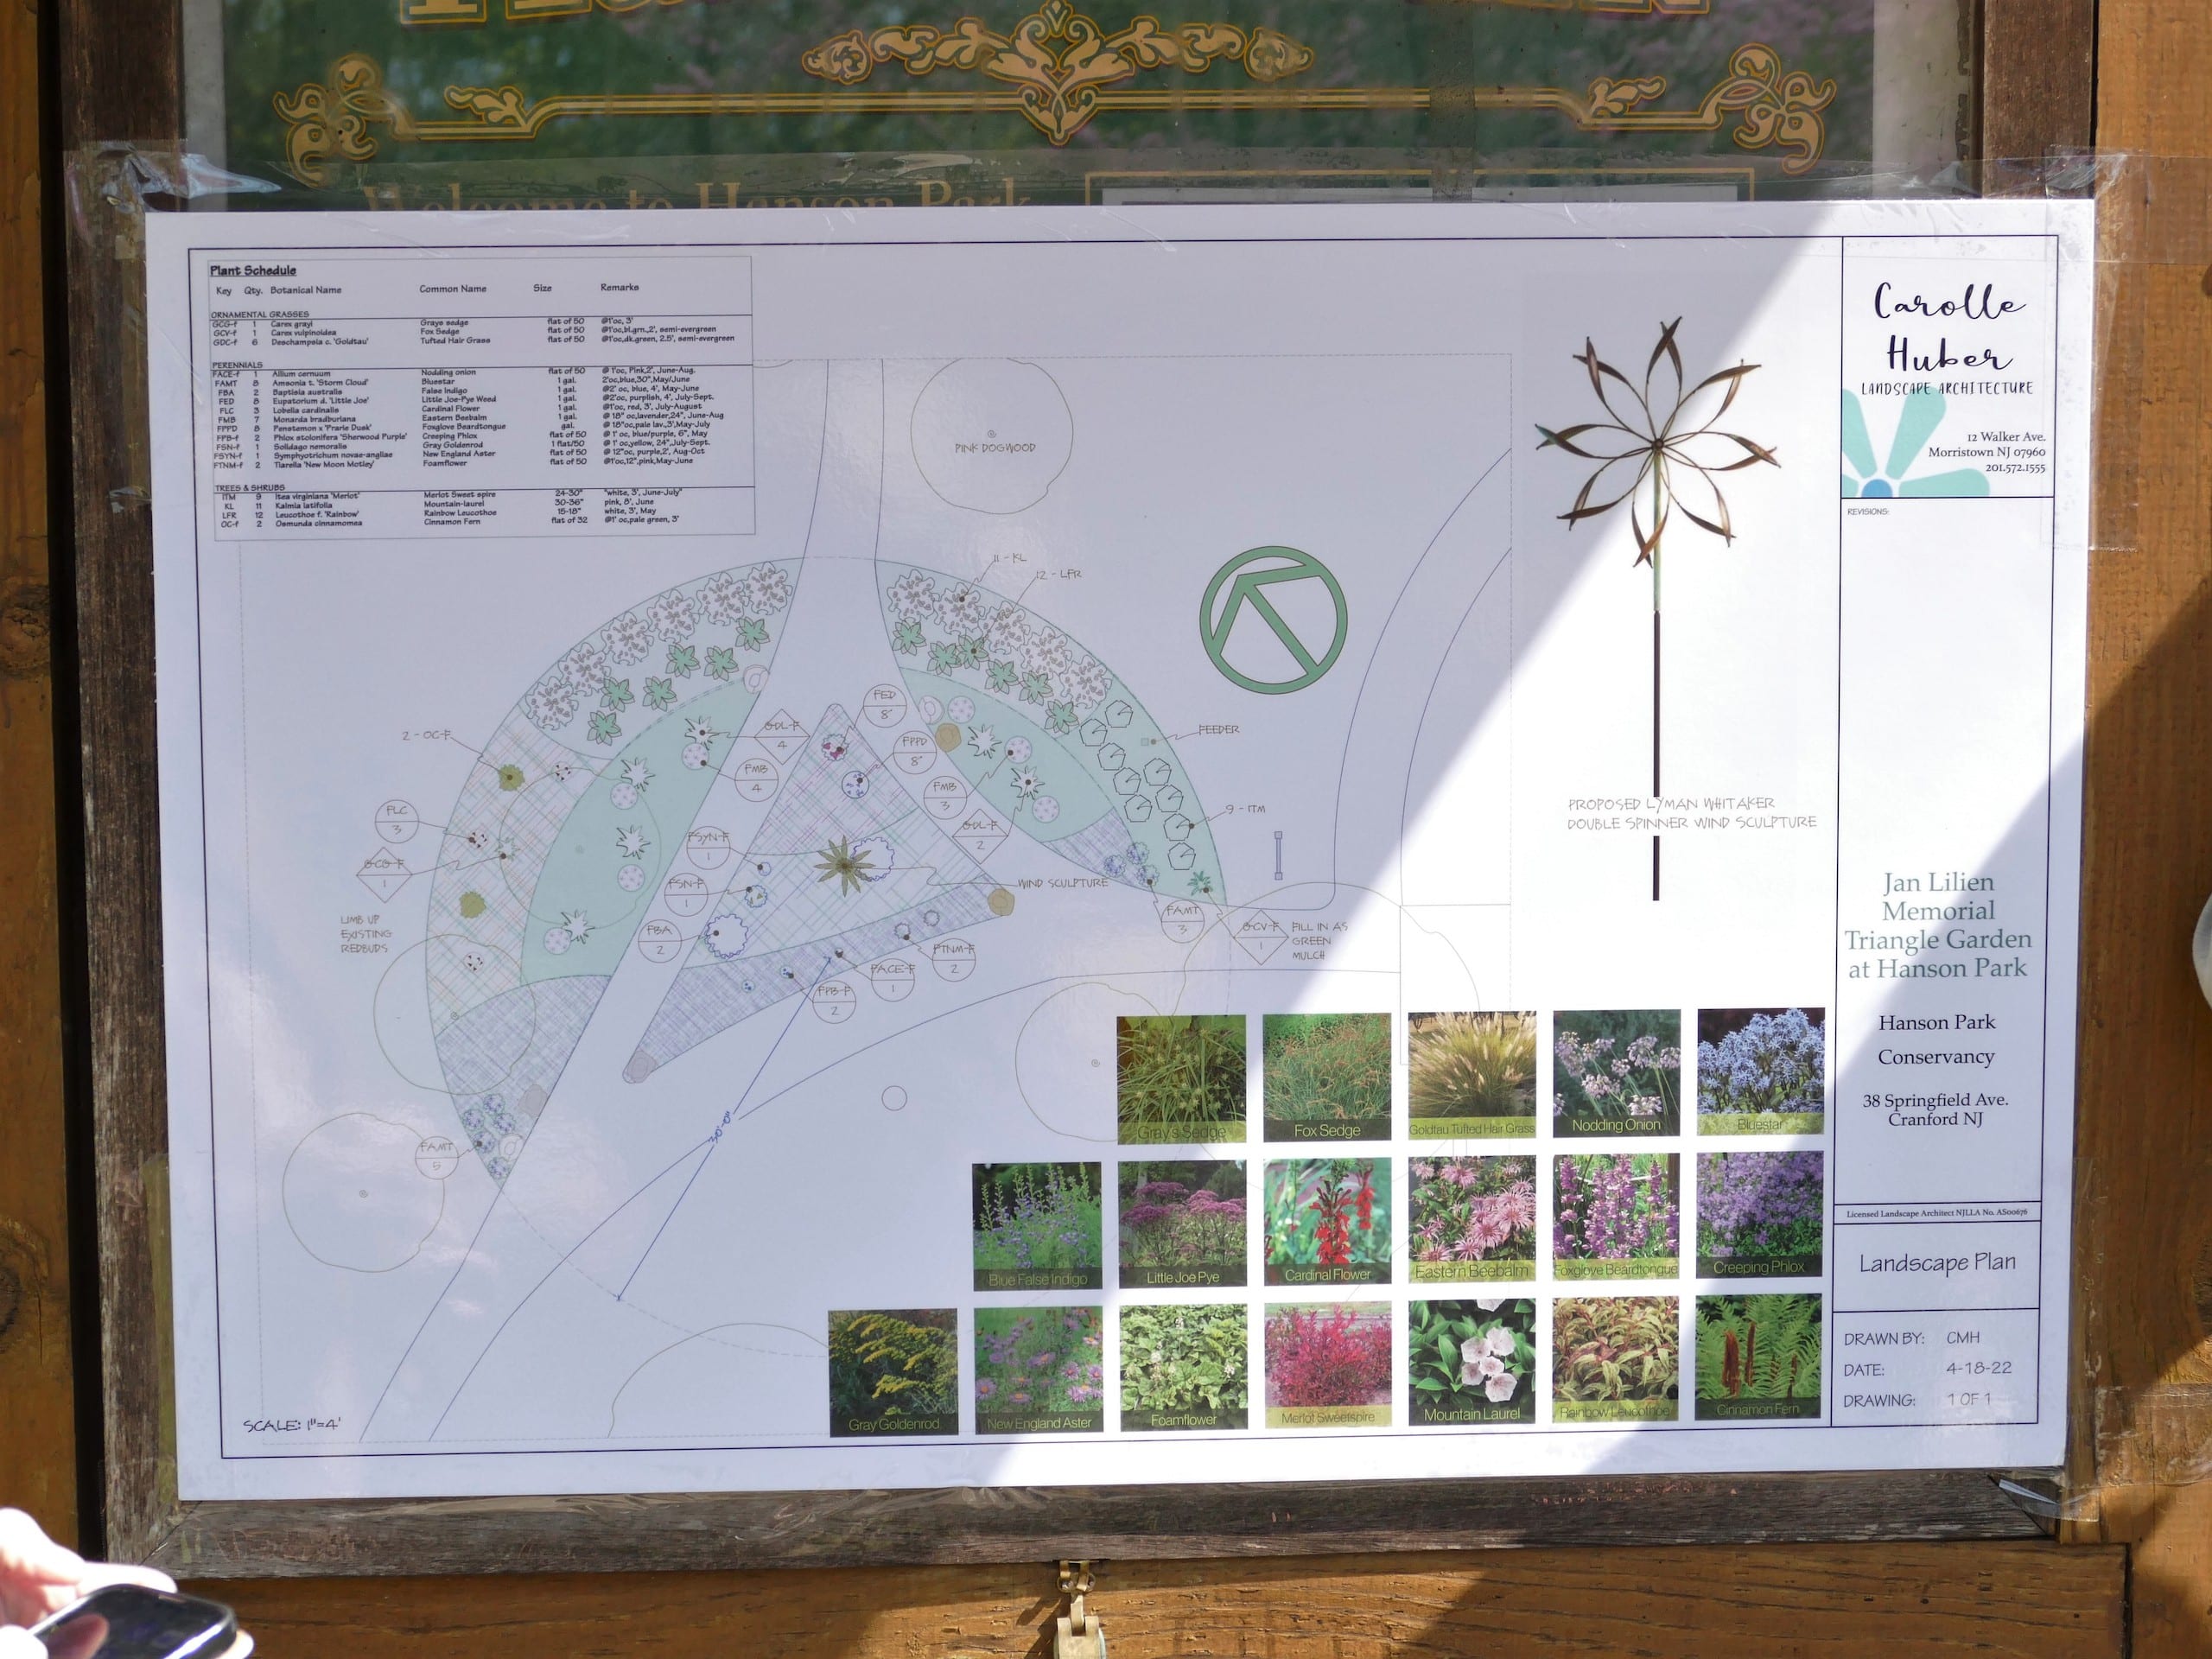 Plan for the Jan Lilien Memorial Triangle Garden at Hanson Park